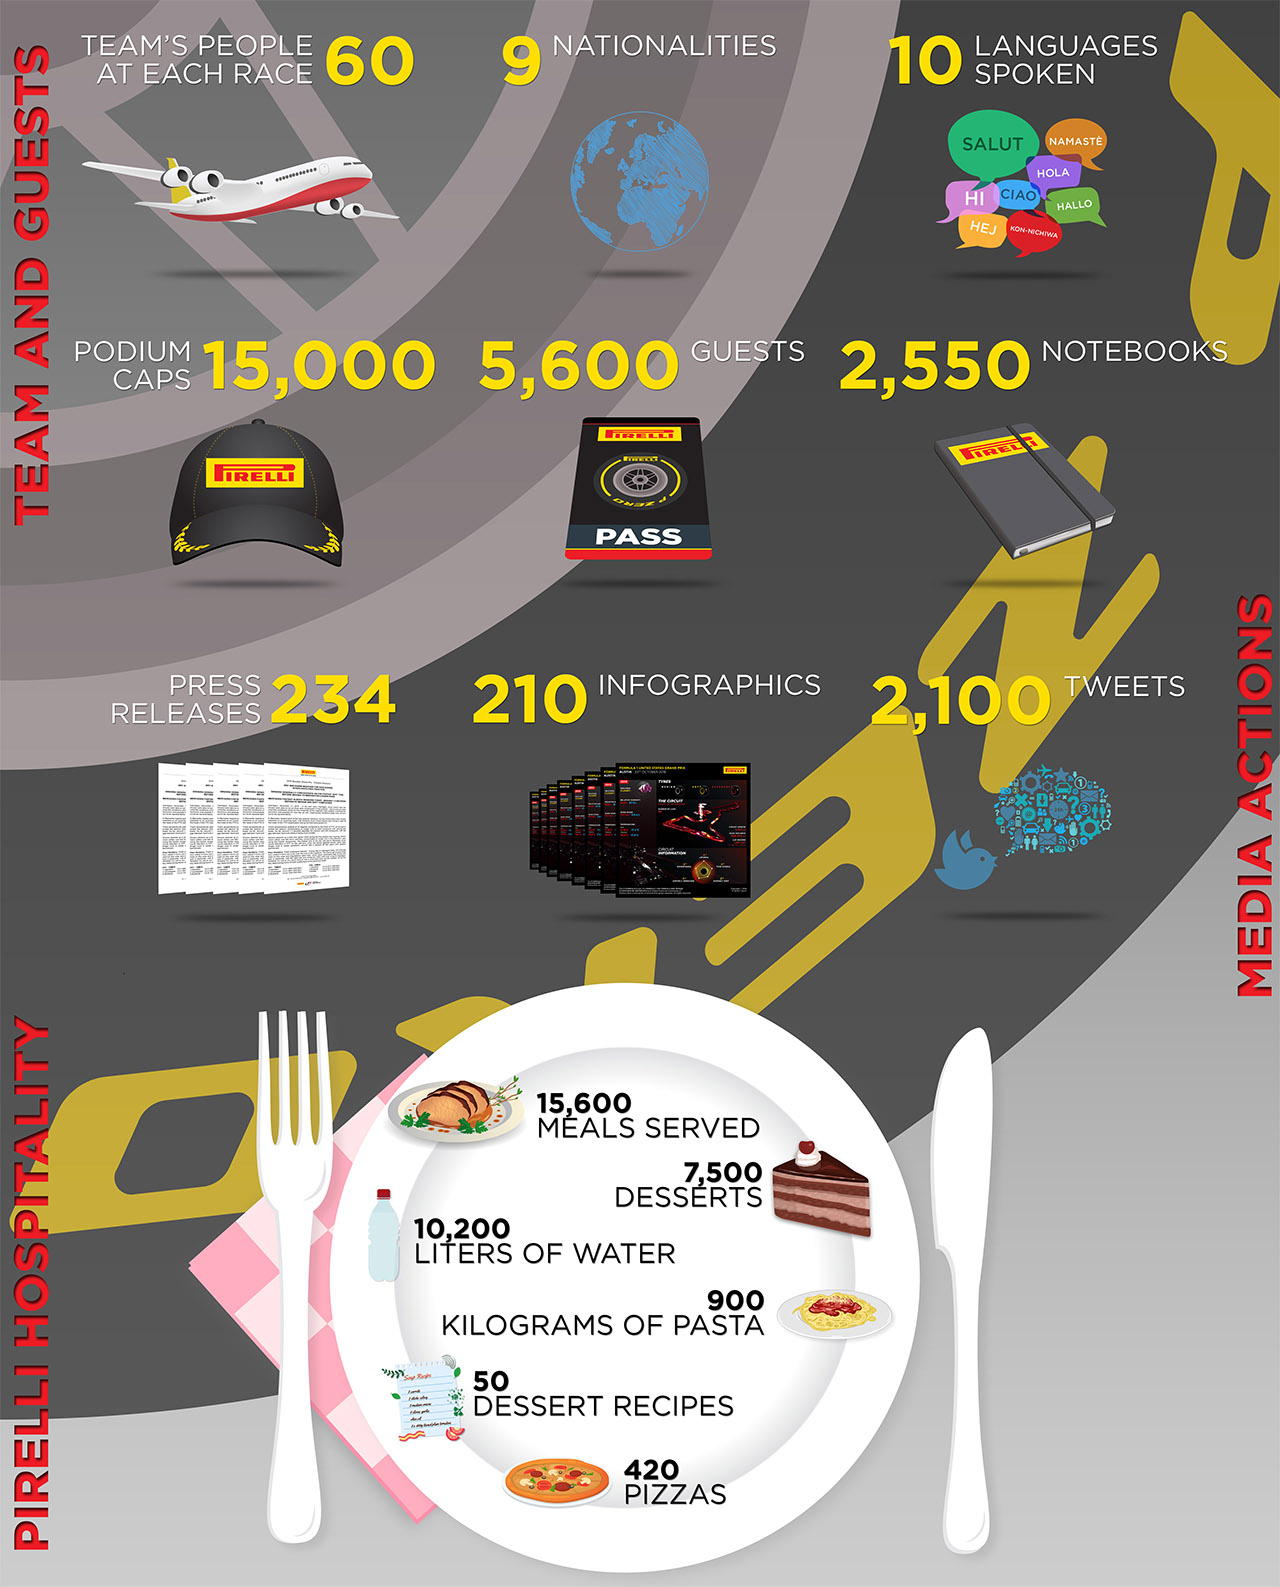 Statistika pohostinství Pirelli za sezónu 2016